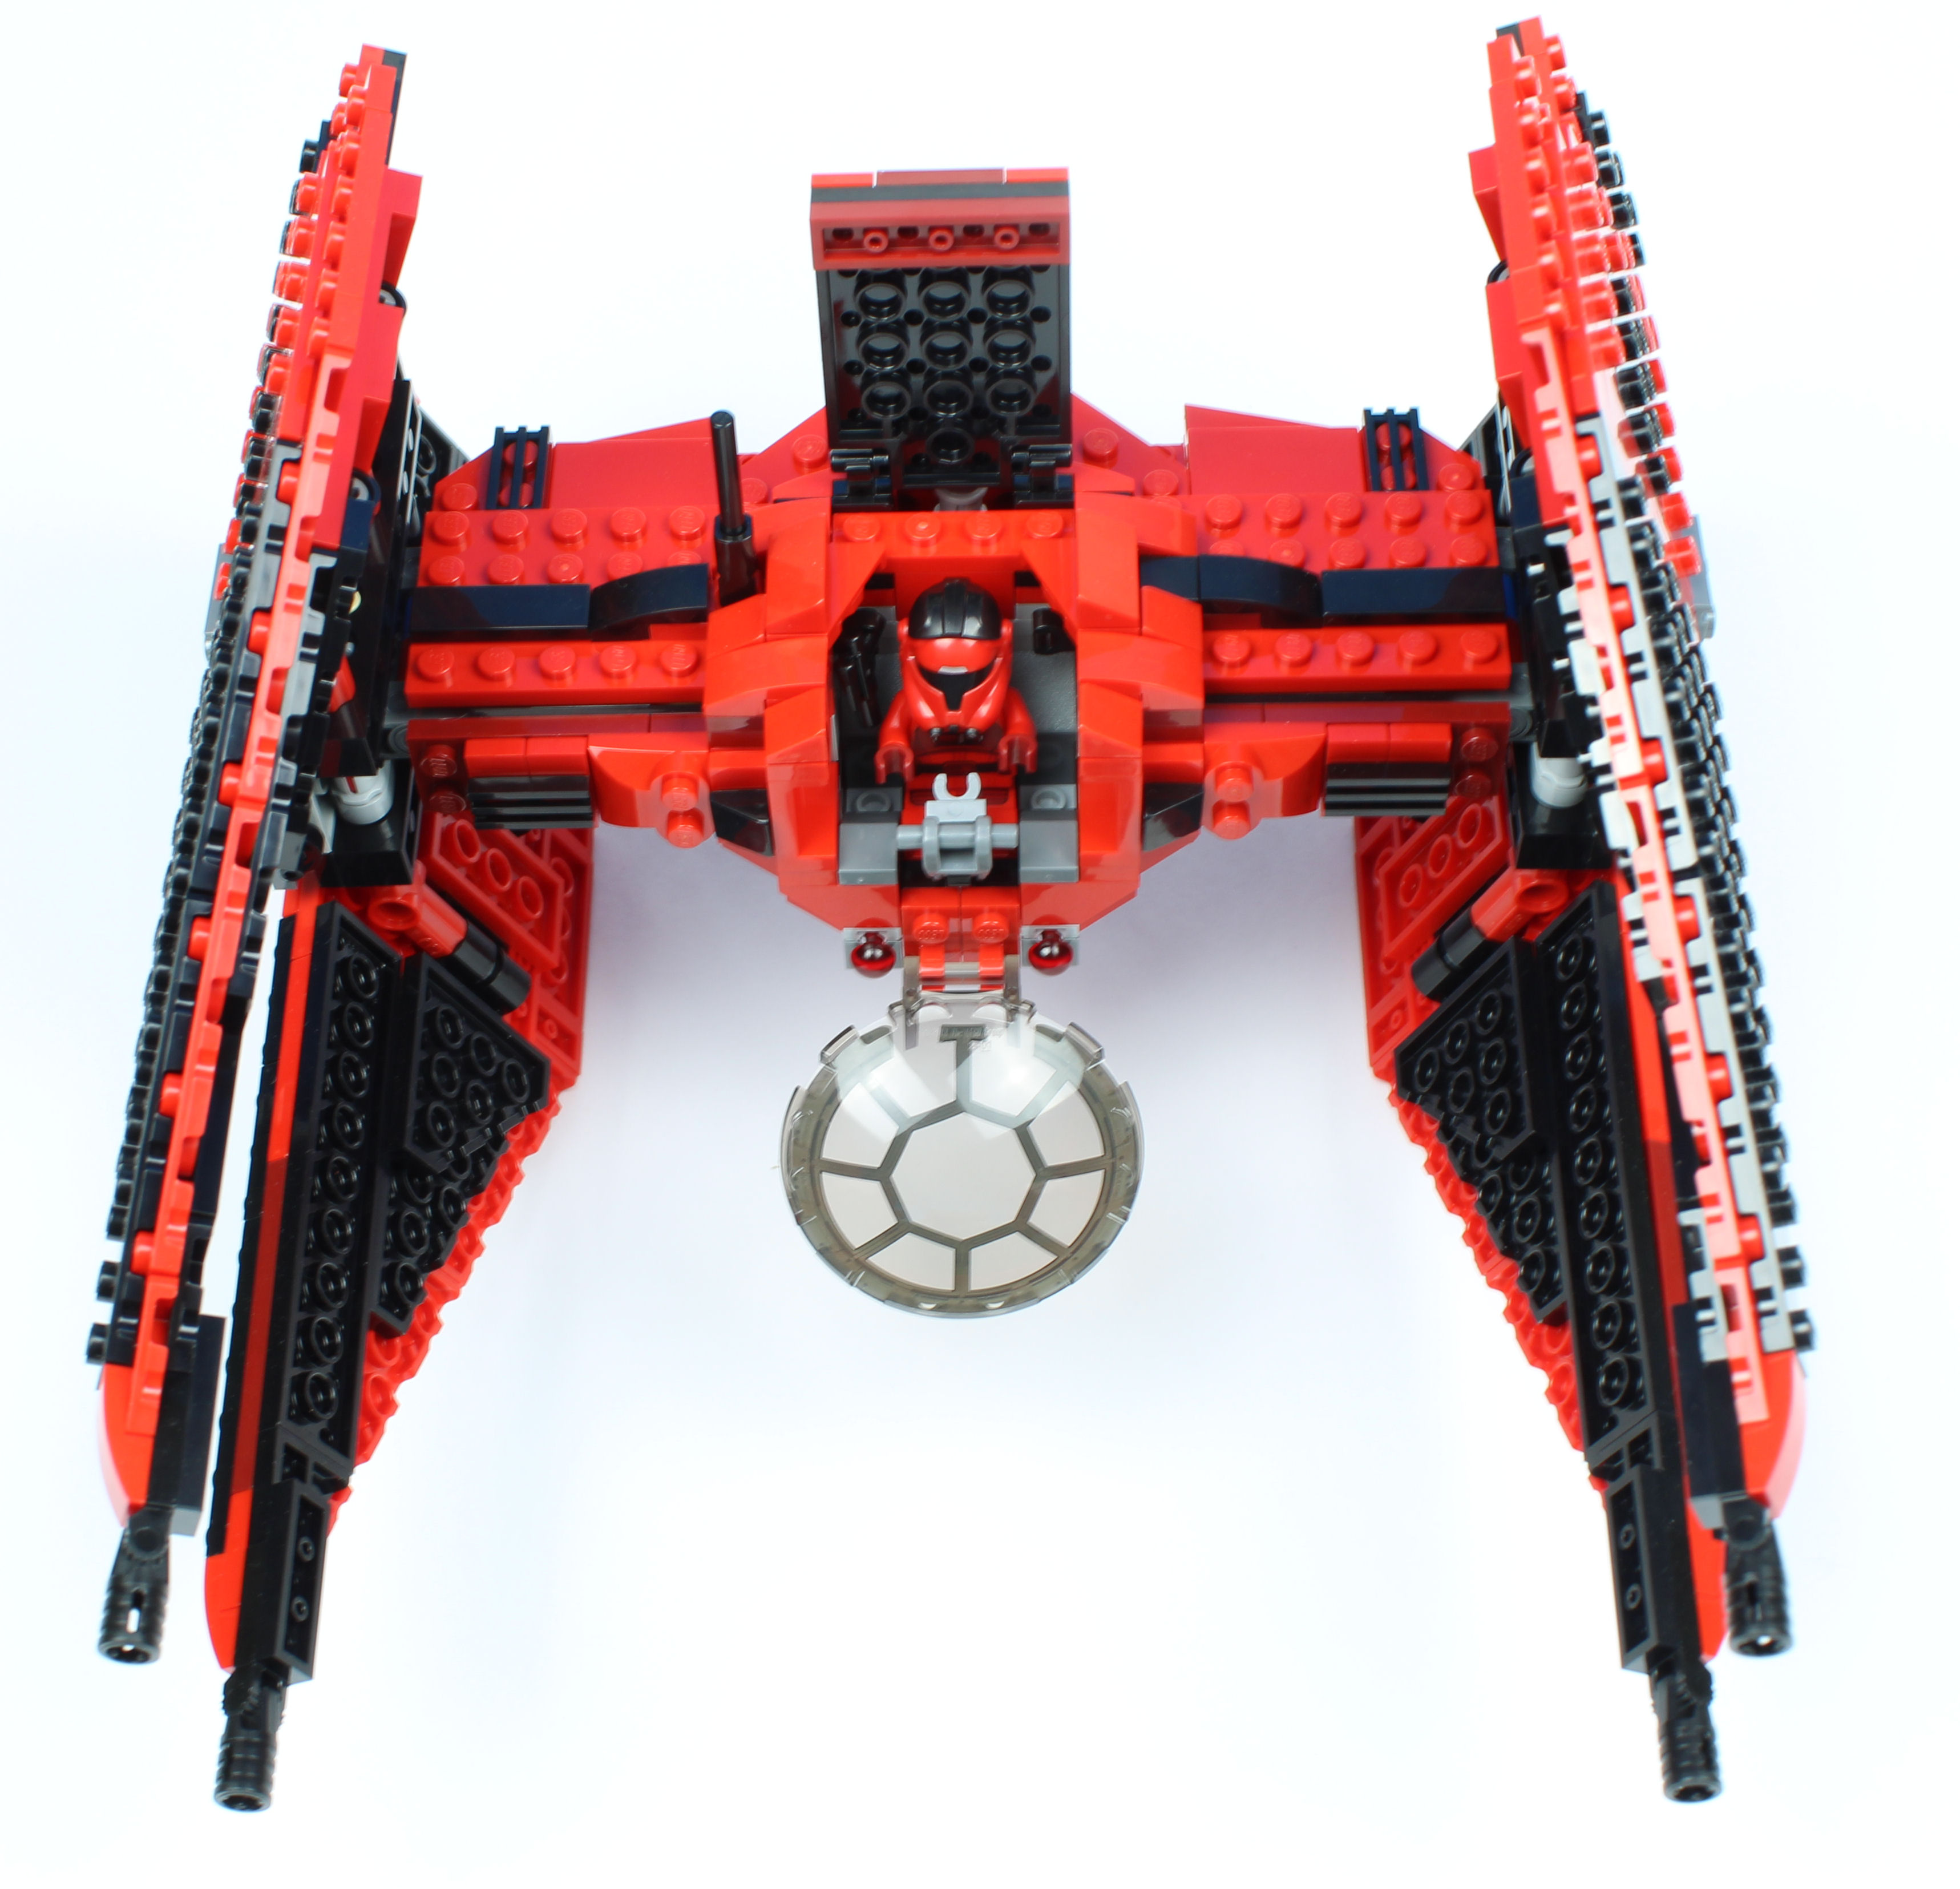 Lego Star Wars Red Tie Interceptor | vlr.eng.br